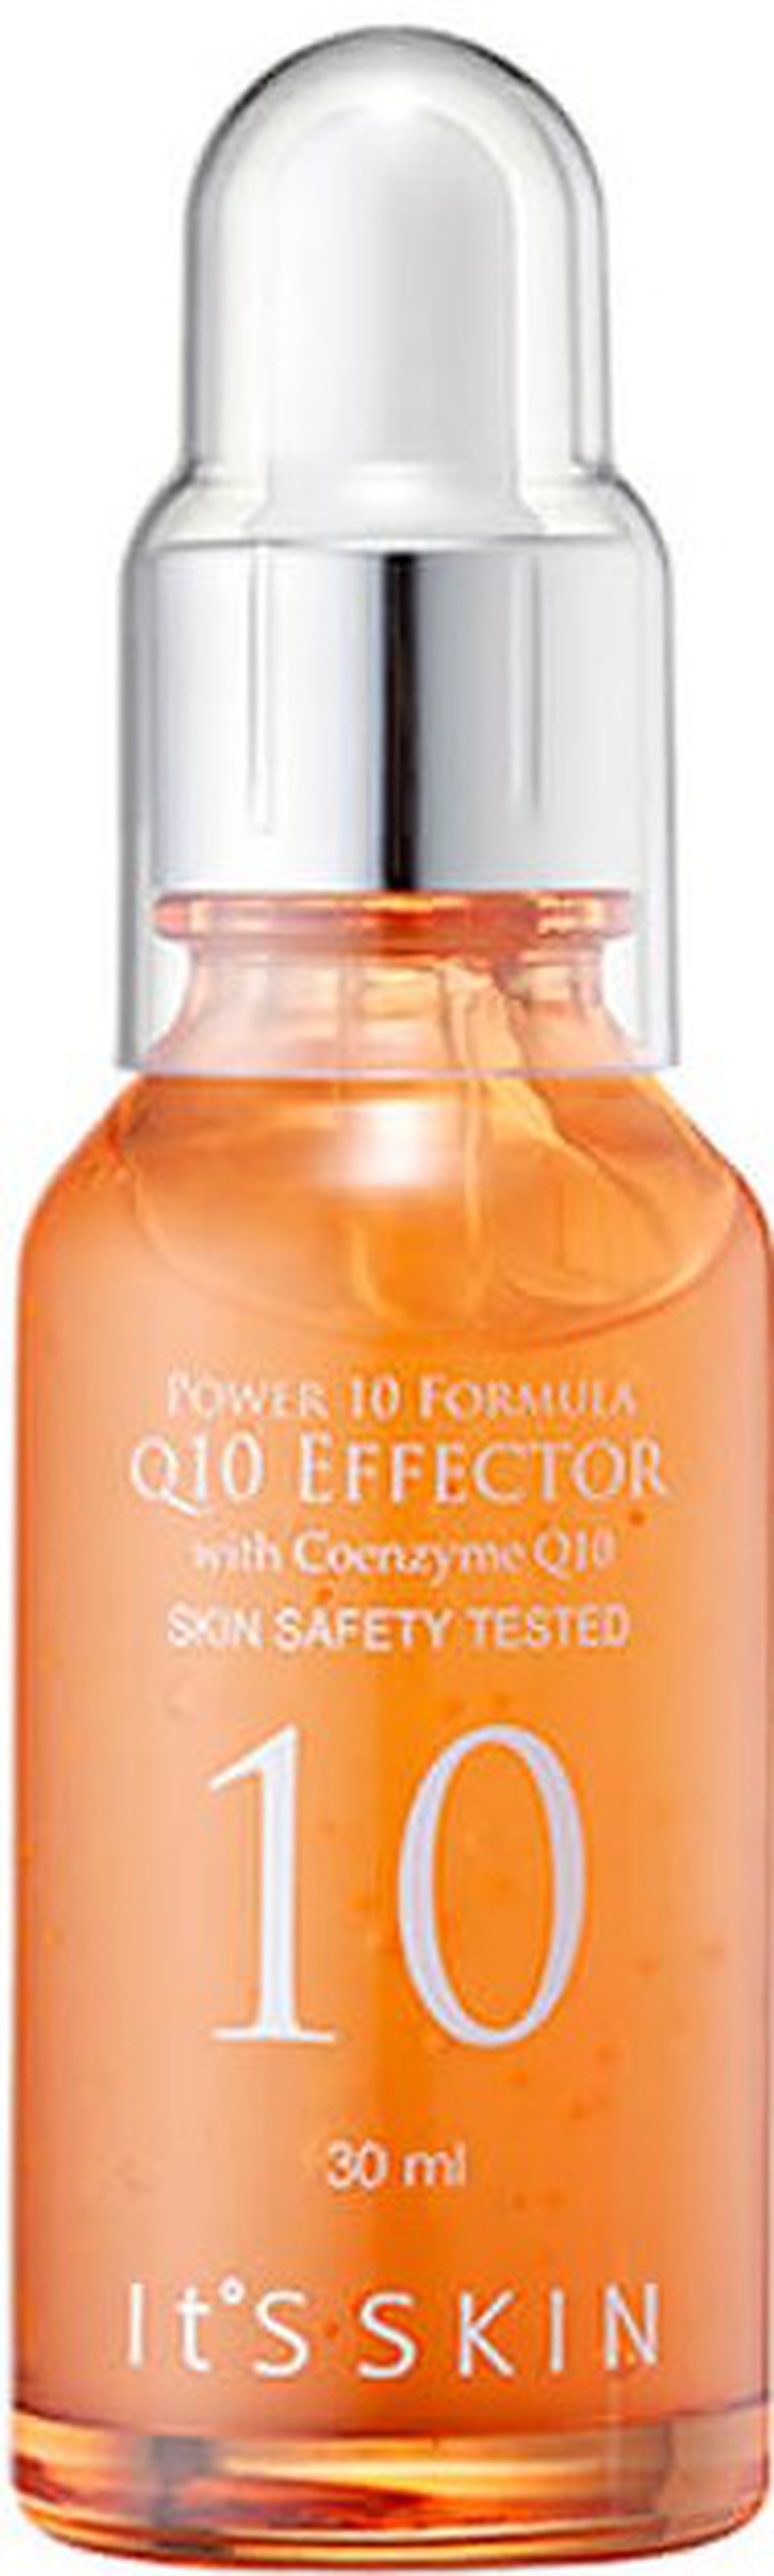 It's Skin Сыворотка Power 10 Formula Q10 Effector, лифтинг, 30мл фото